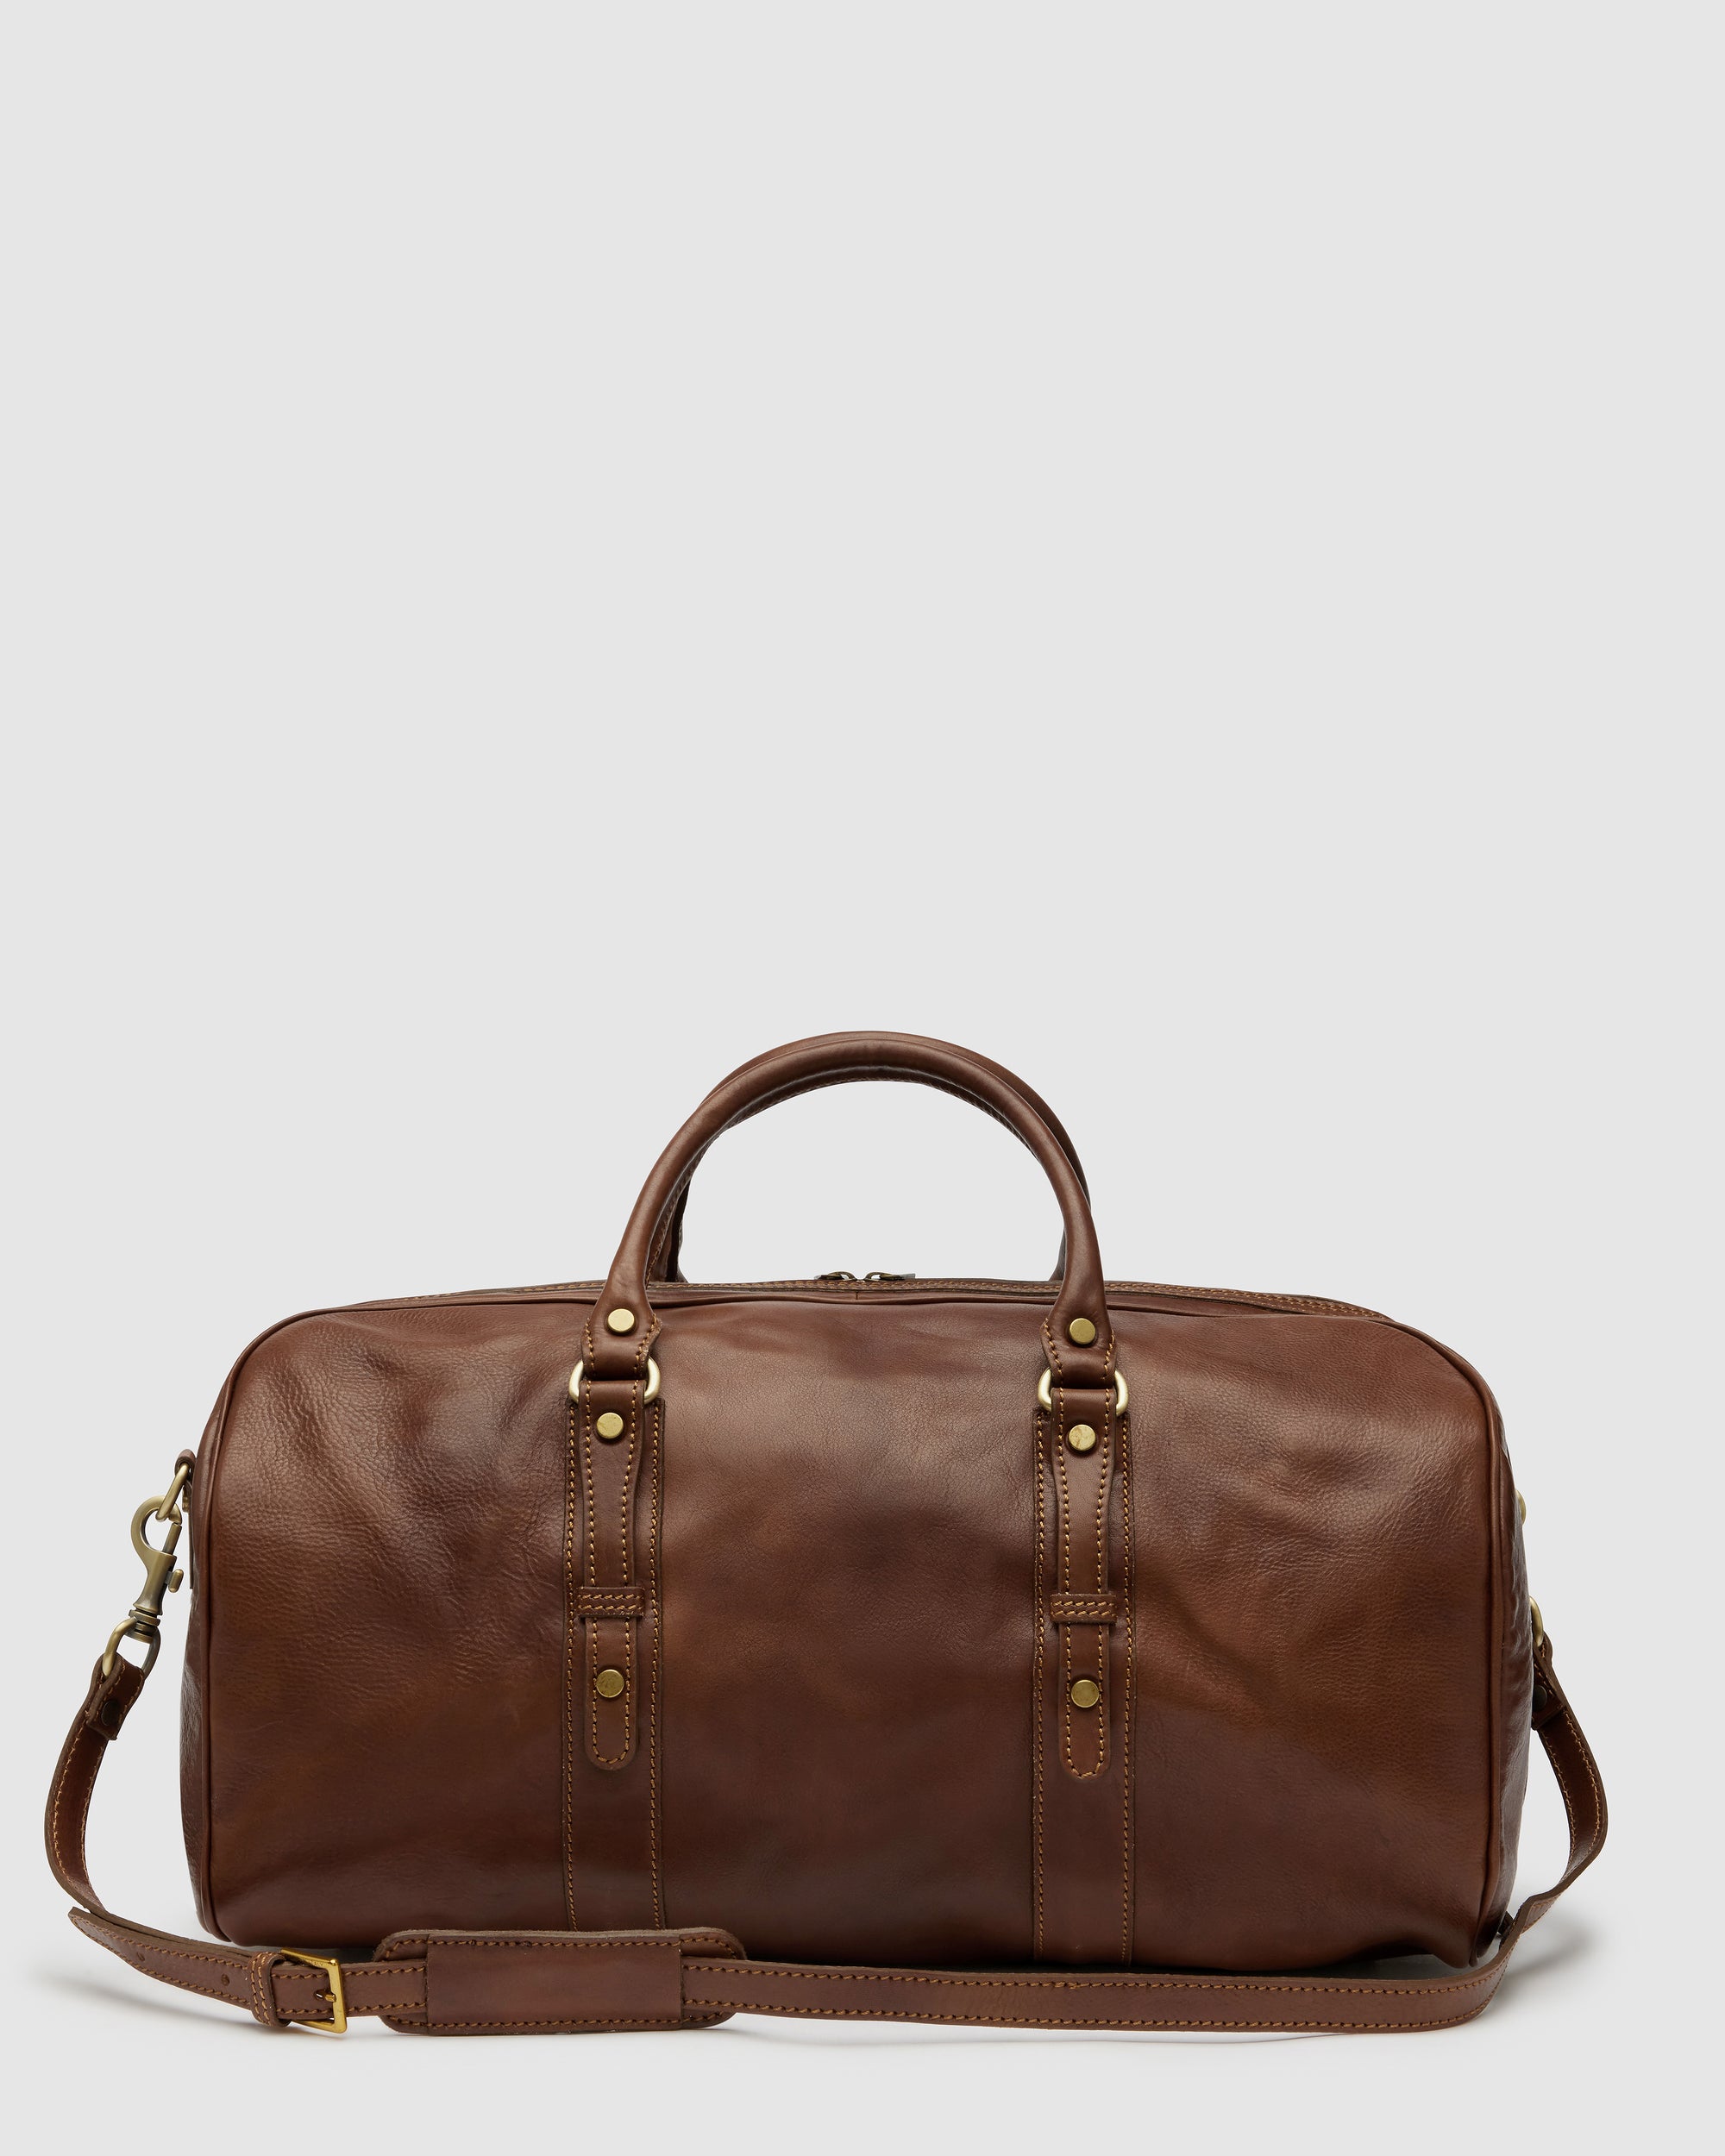 Polo Medium Brown - Leather Duffle Bag